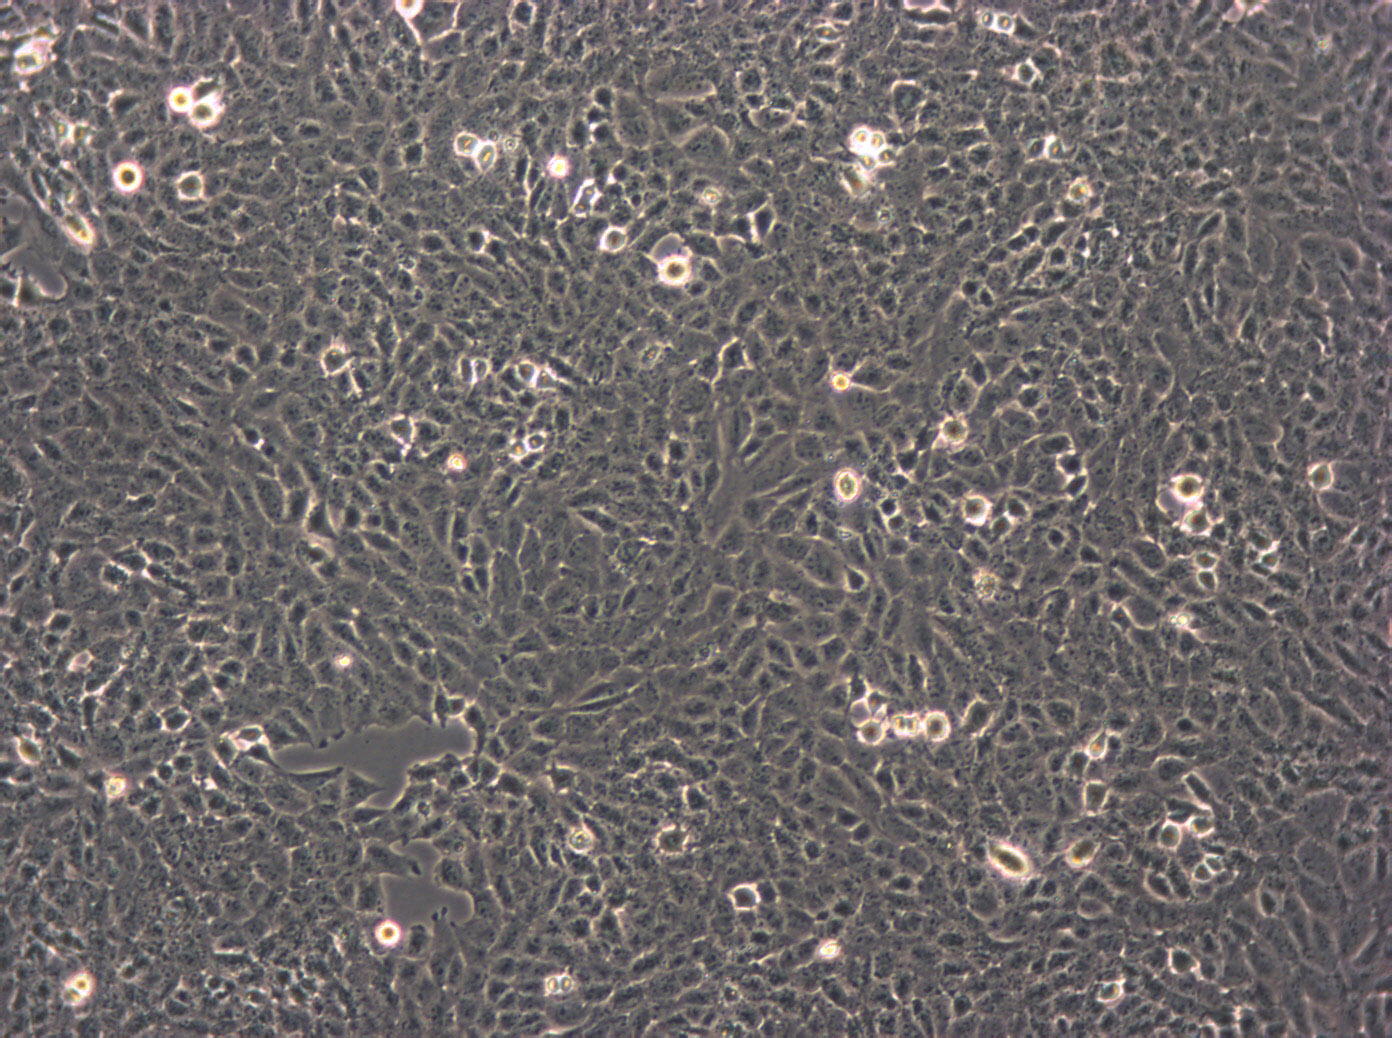 SW1990 cell line人胰腺癌细胞系